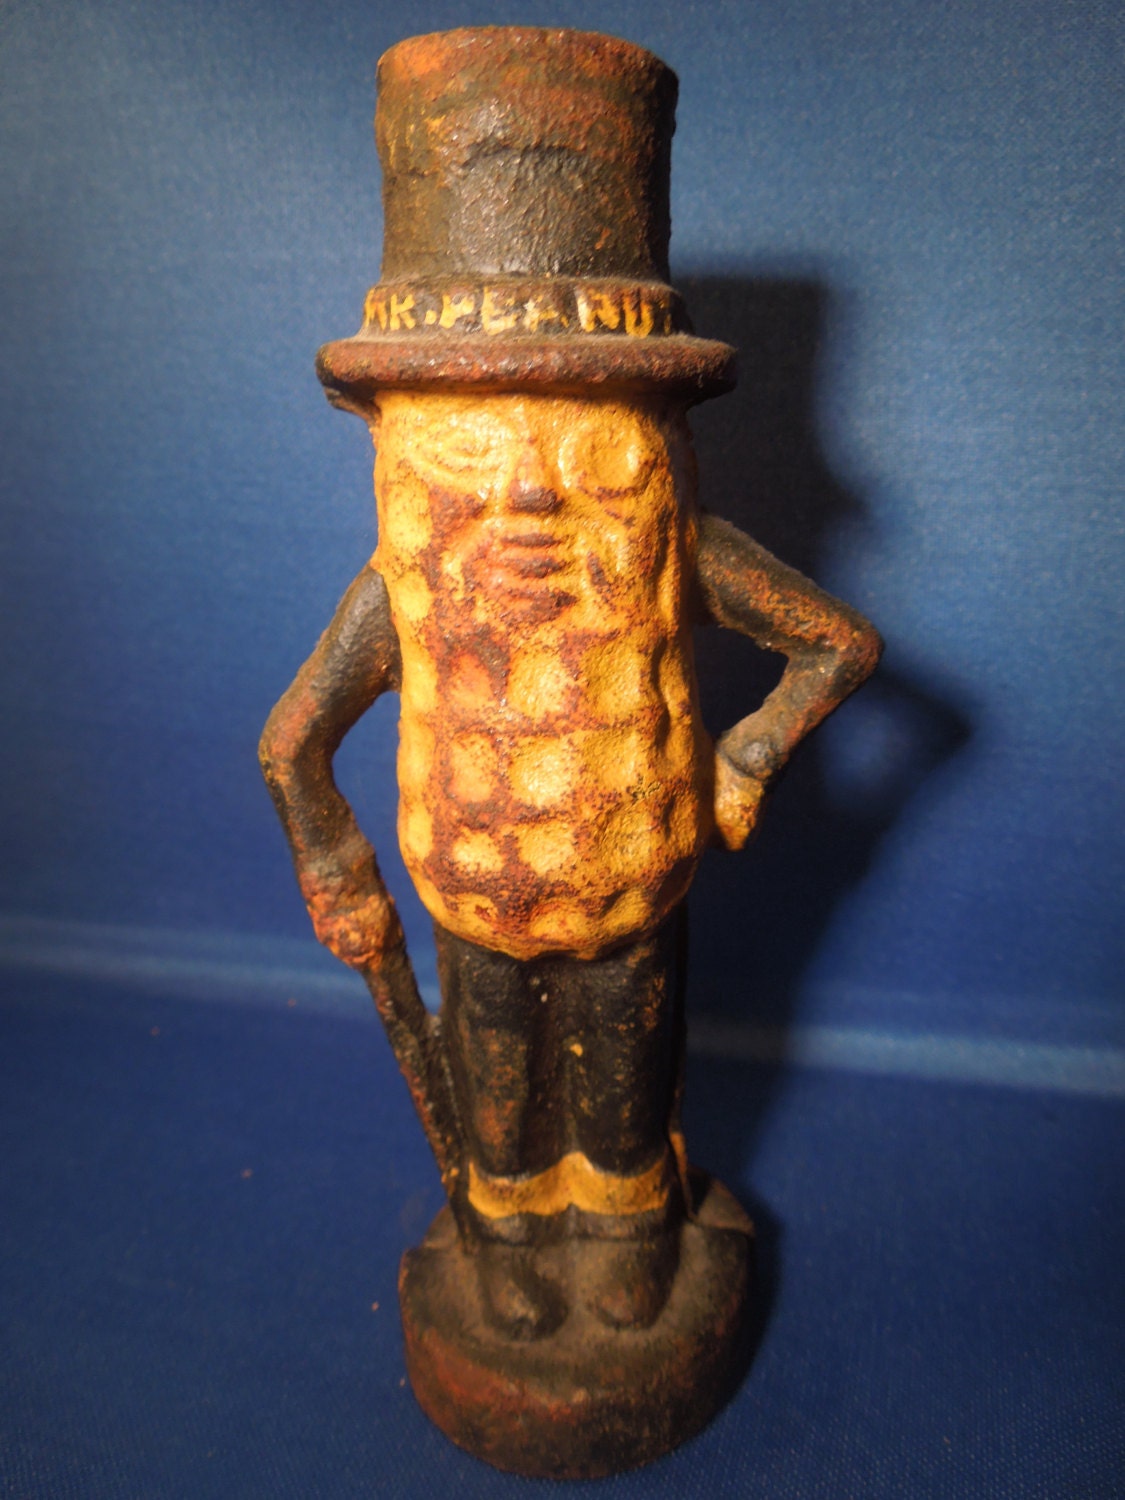 Vintage Mr. Peanut Cast Iron Bank by OpheliasVintageAttic on Etsy1125 x 1500